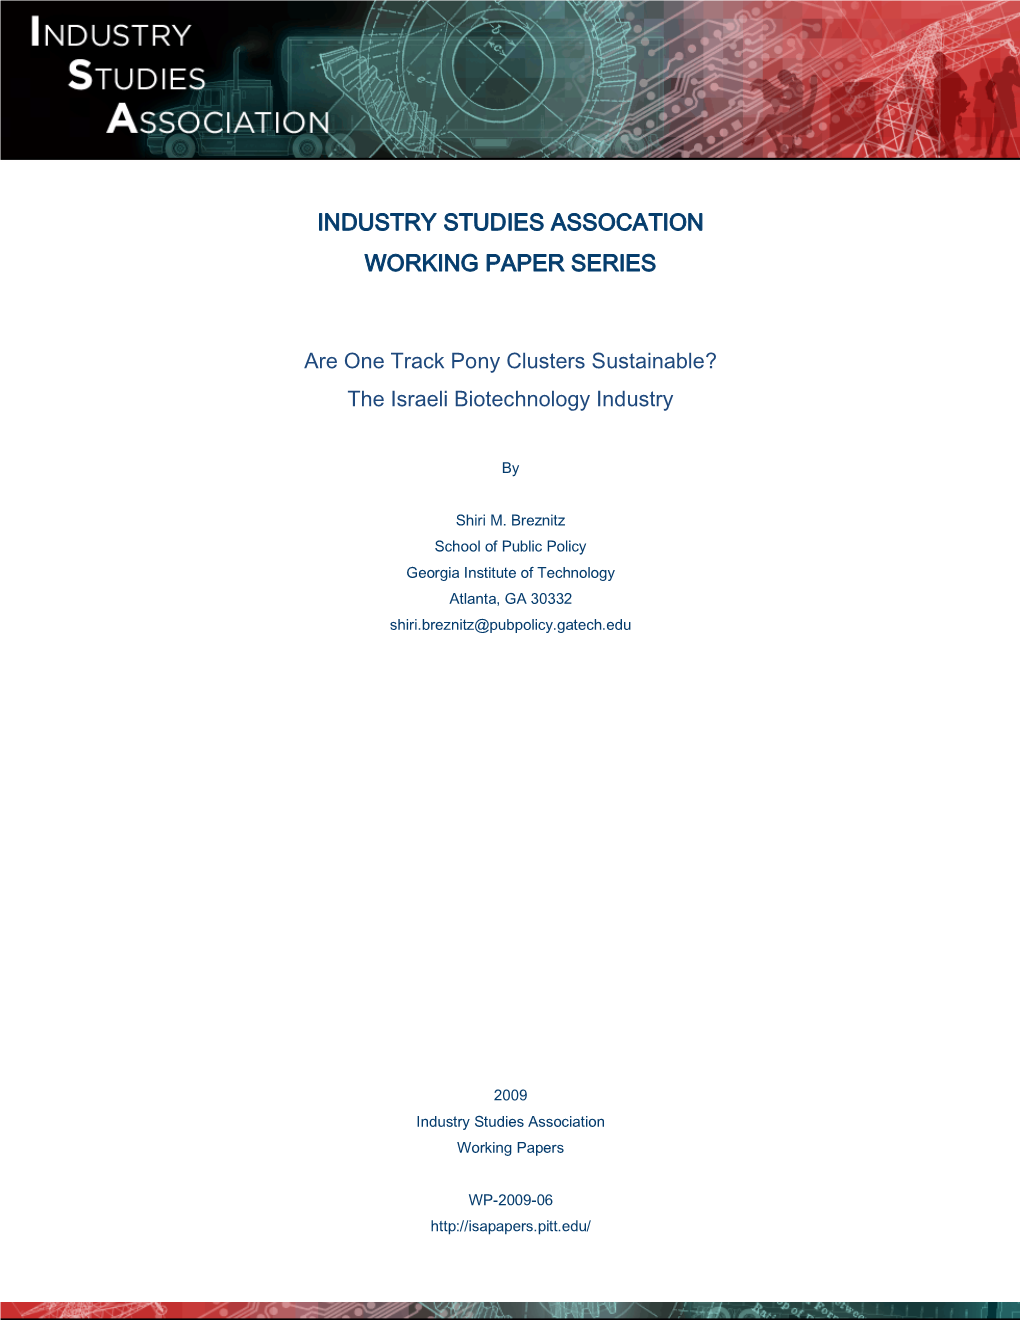 Industry Studies Assocation Working Paper Series